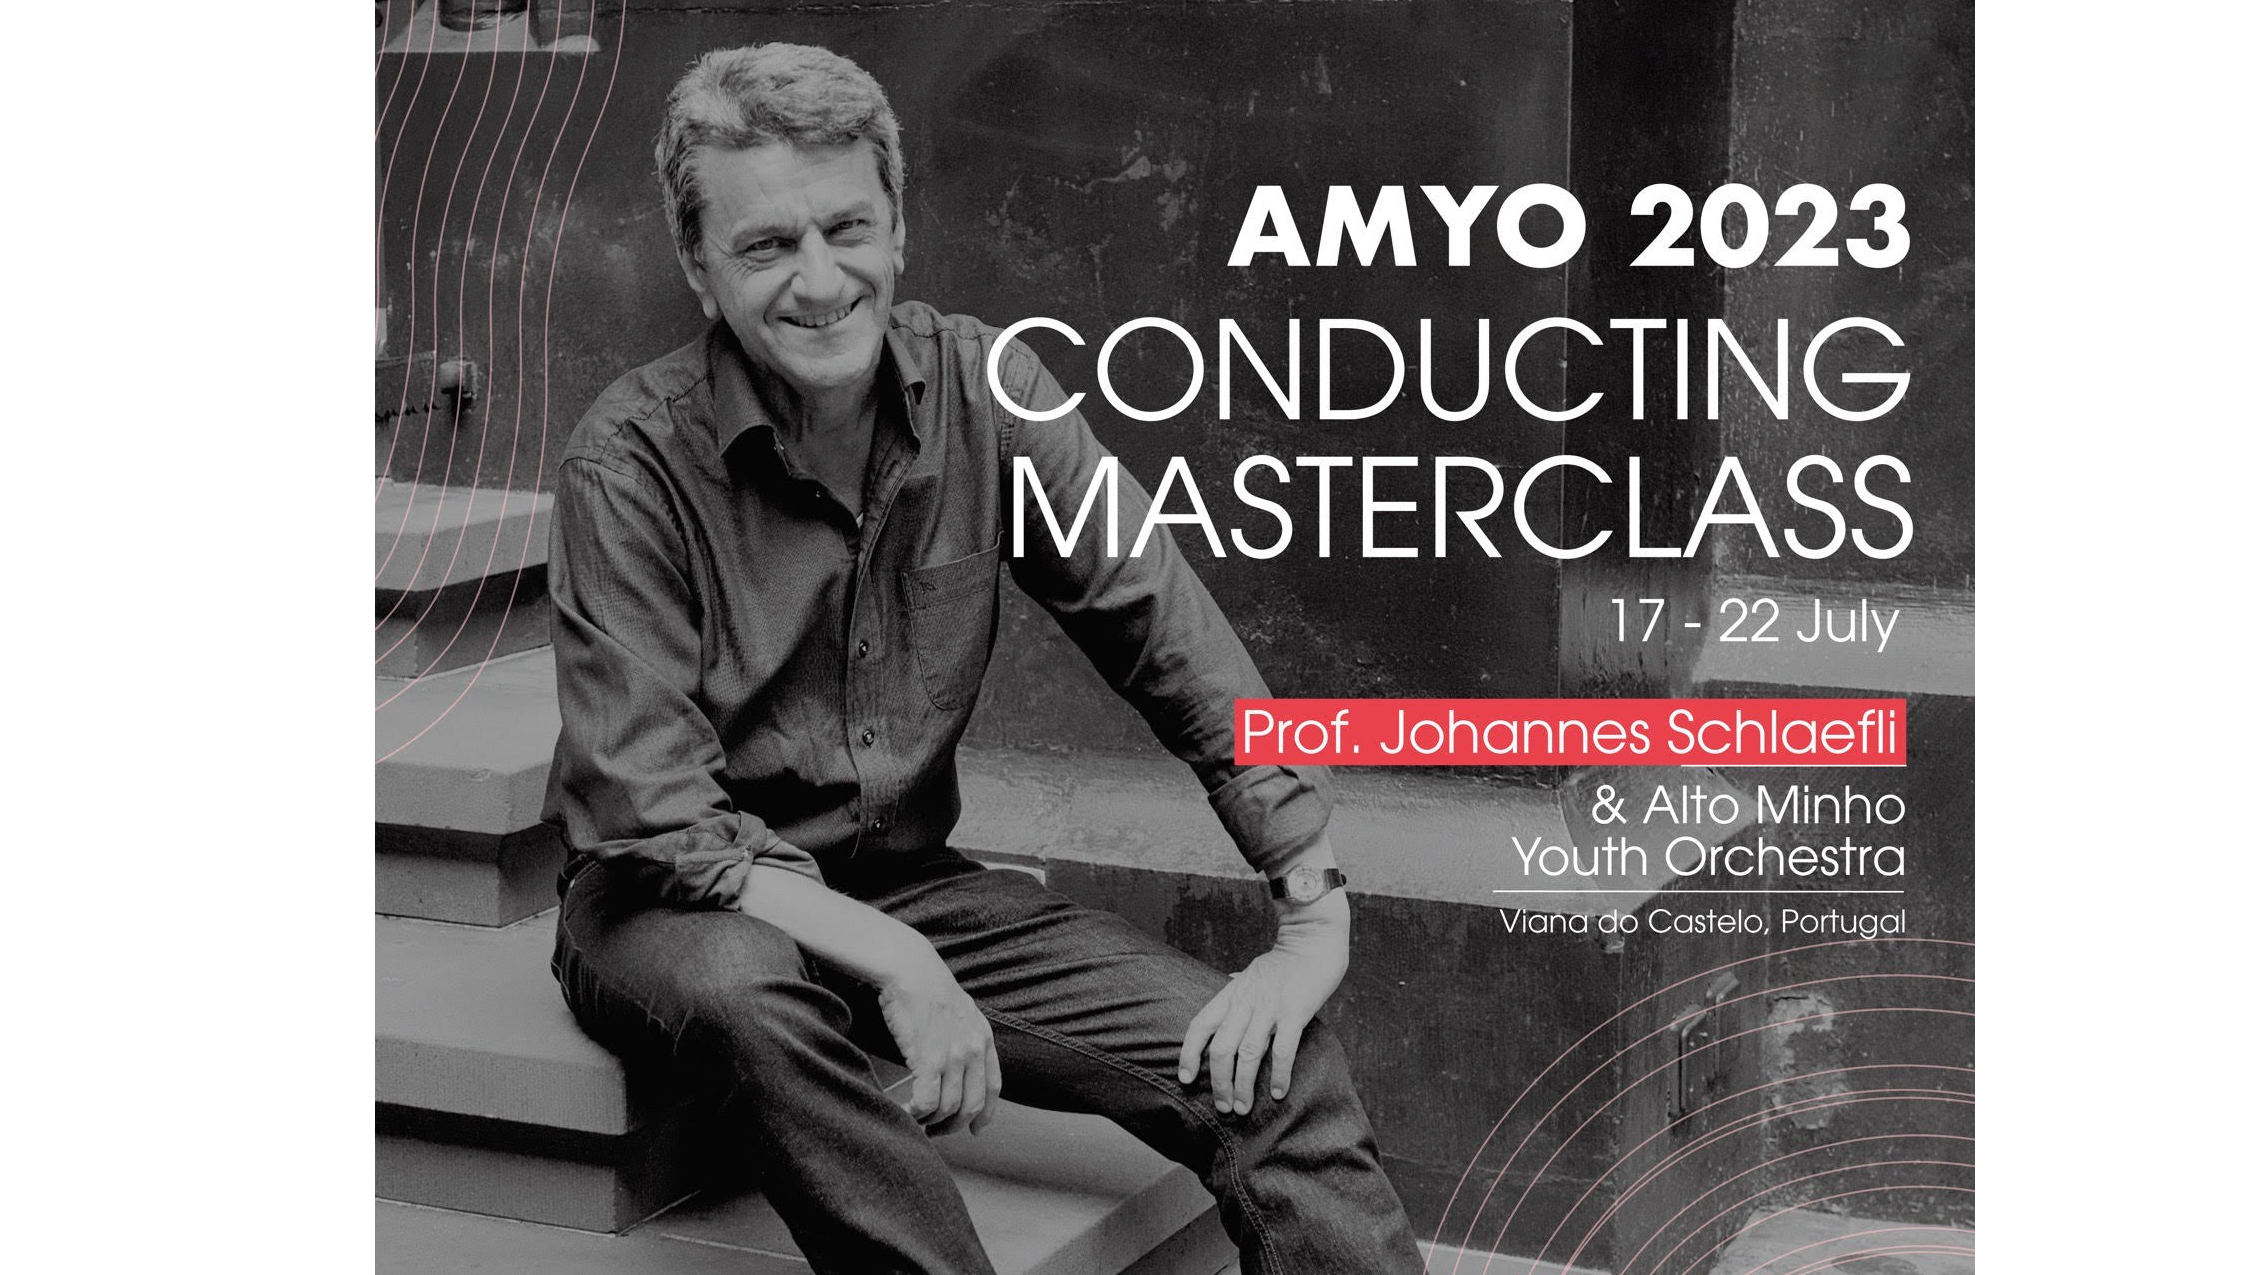 AMYO 2023 Conducting masterclass - Johannes Schlaefli